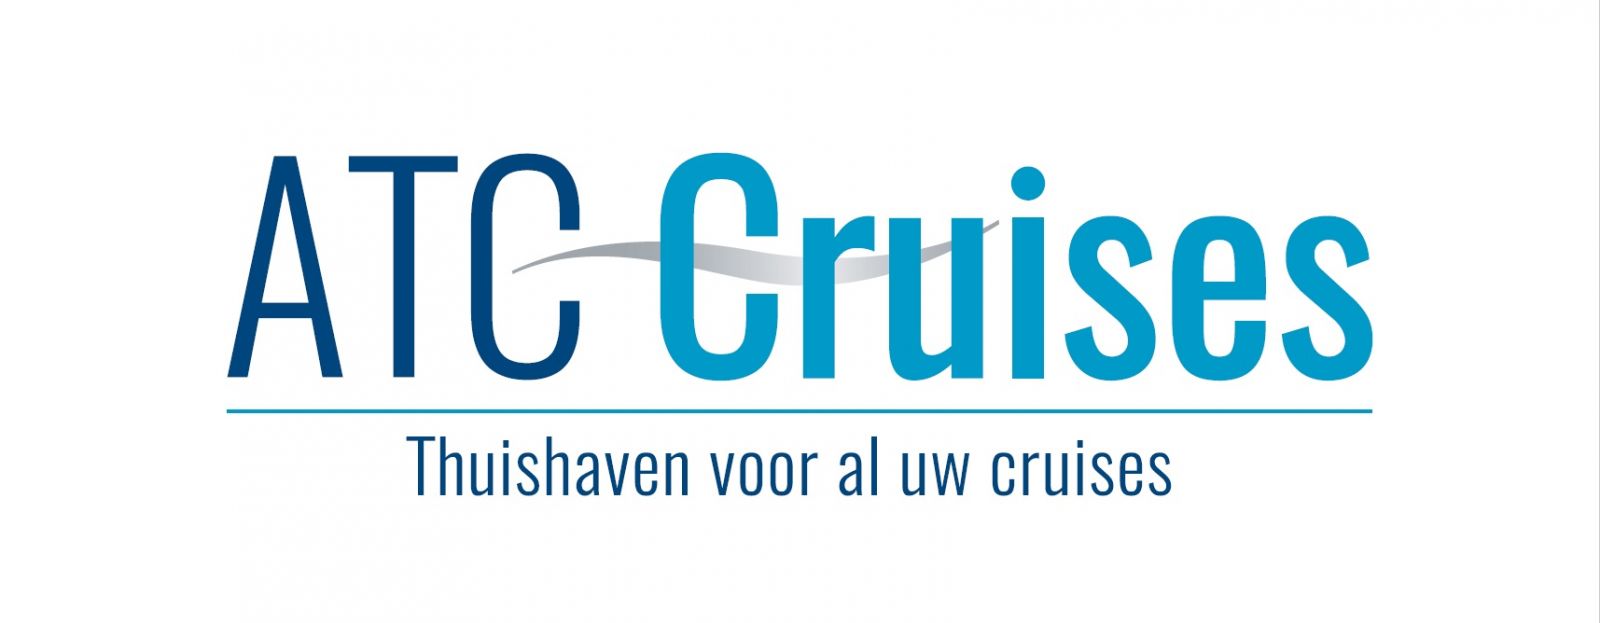 atc cruises